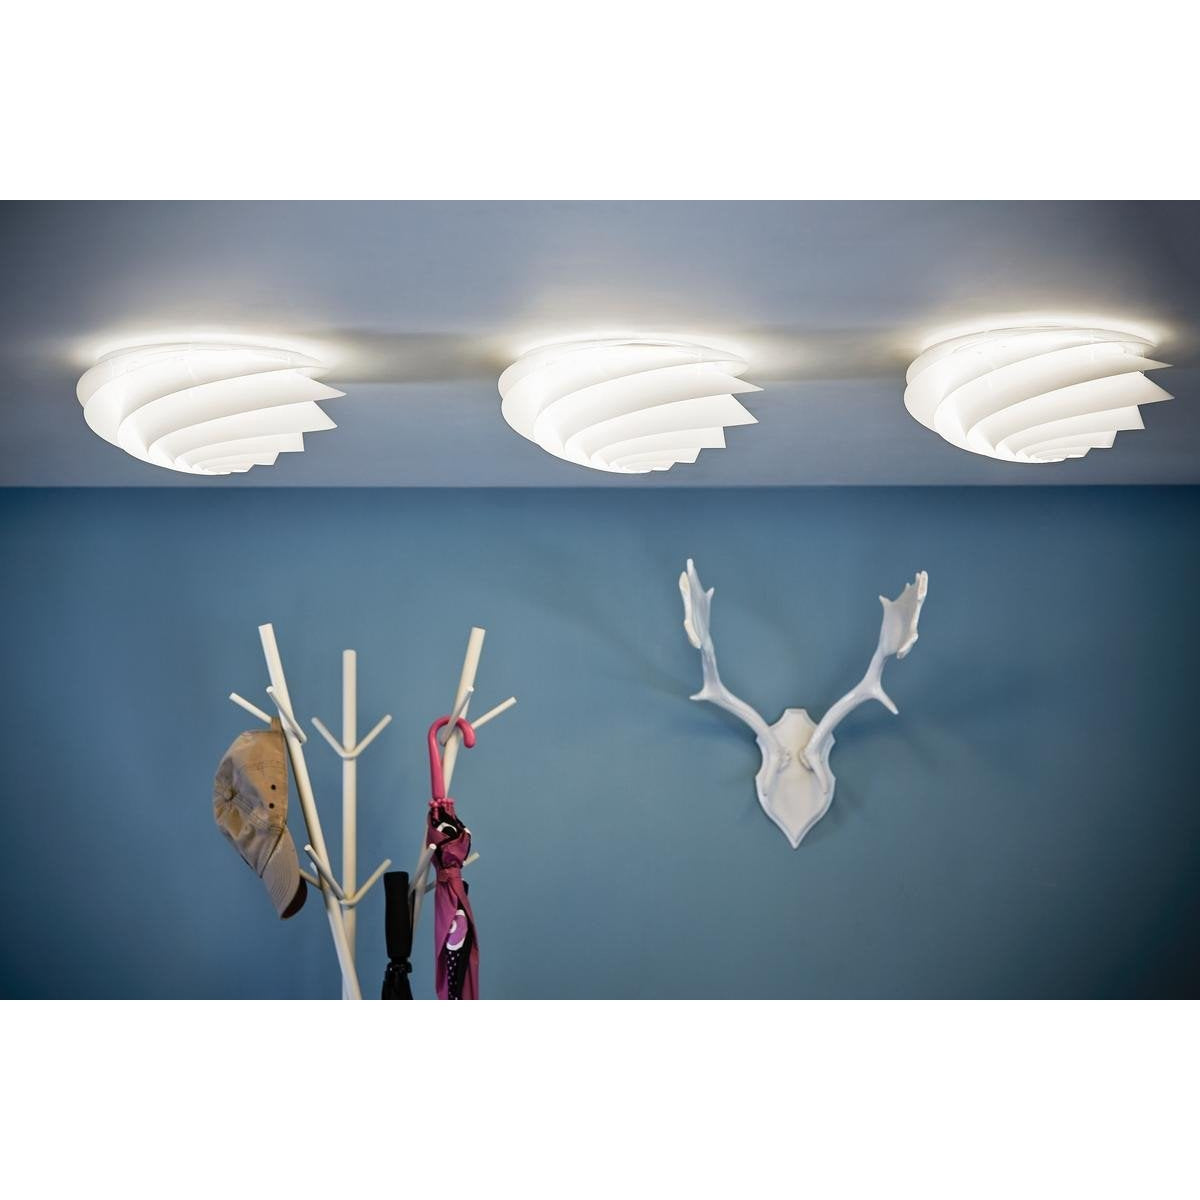 Le Klint Swirl Wall/Ceiling Lamp, White ø60 Cm